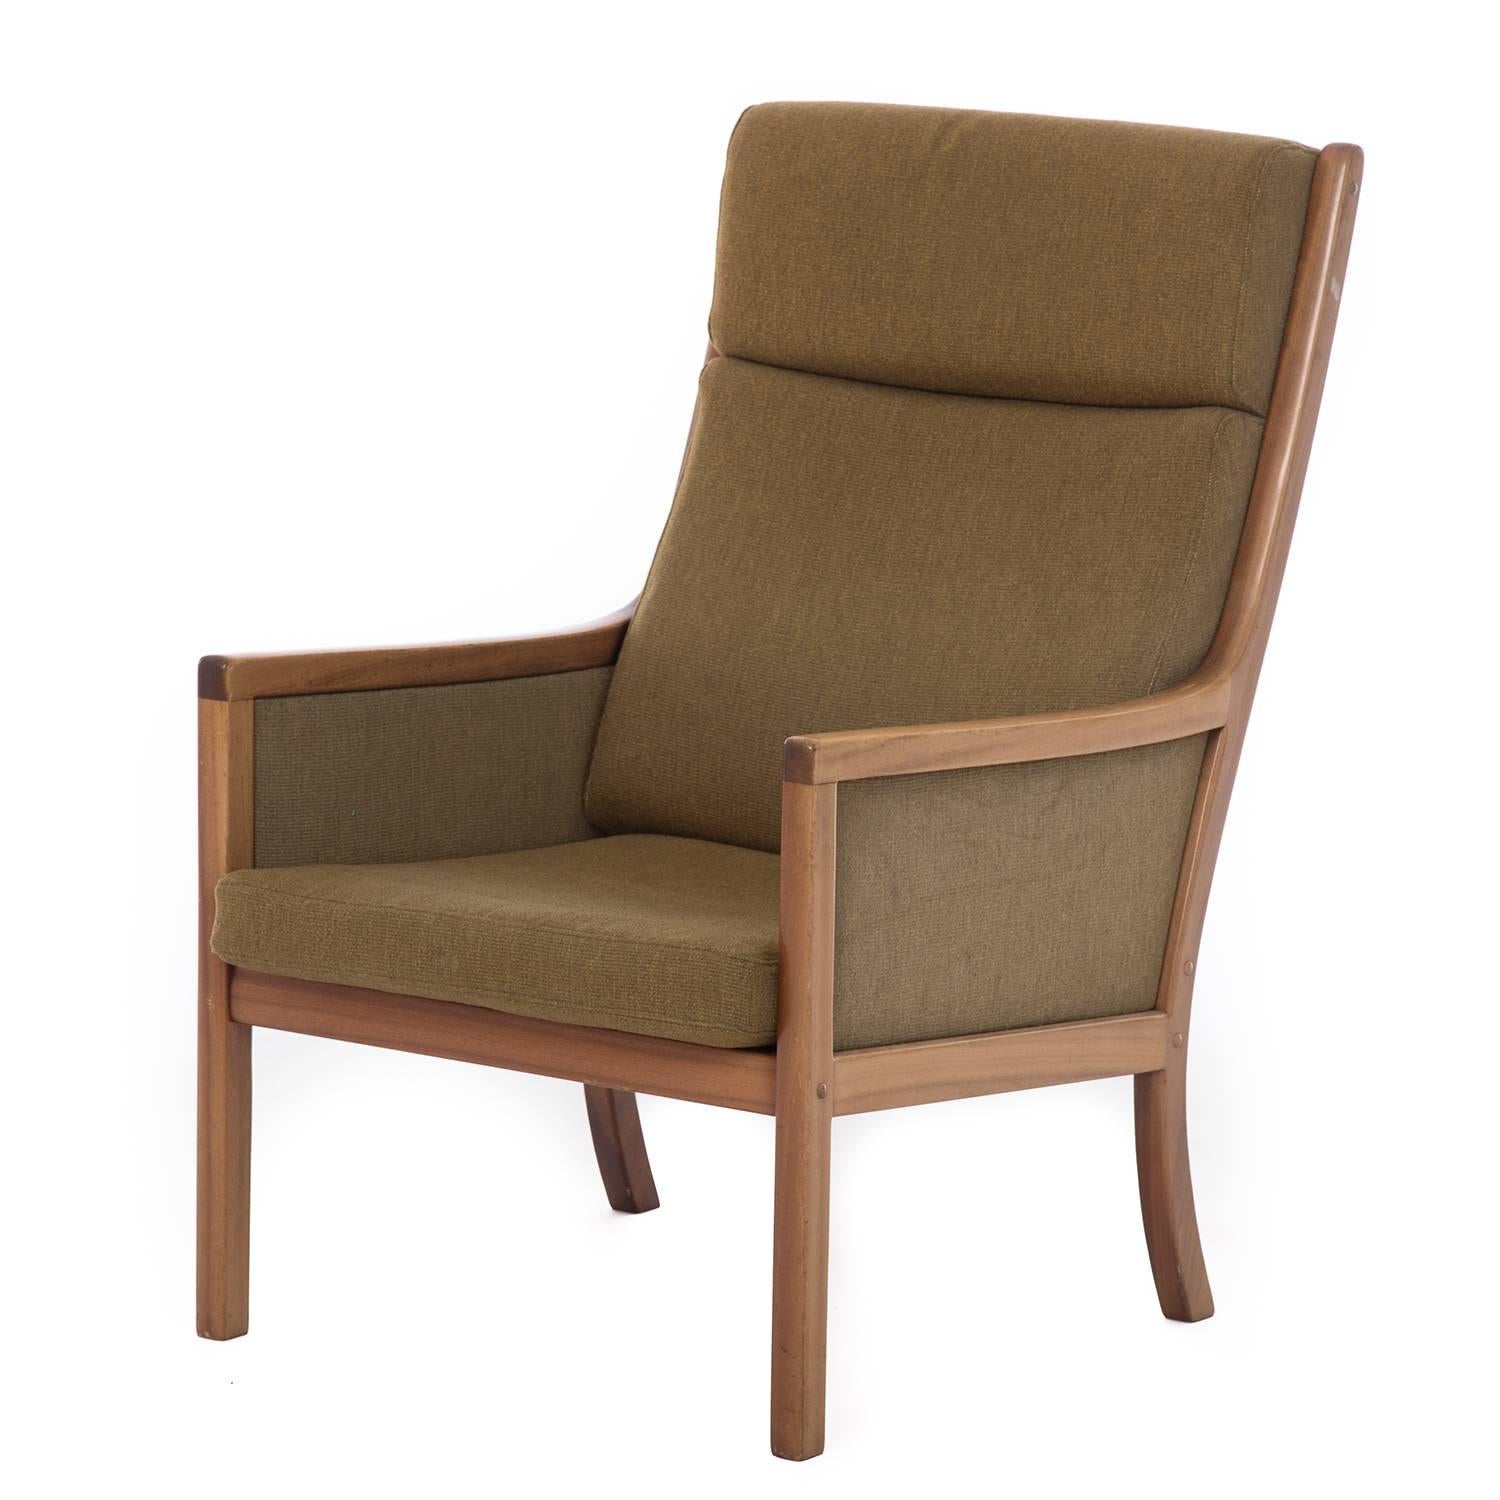 20th Century Danish Modern Wanscher Lounge Chair